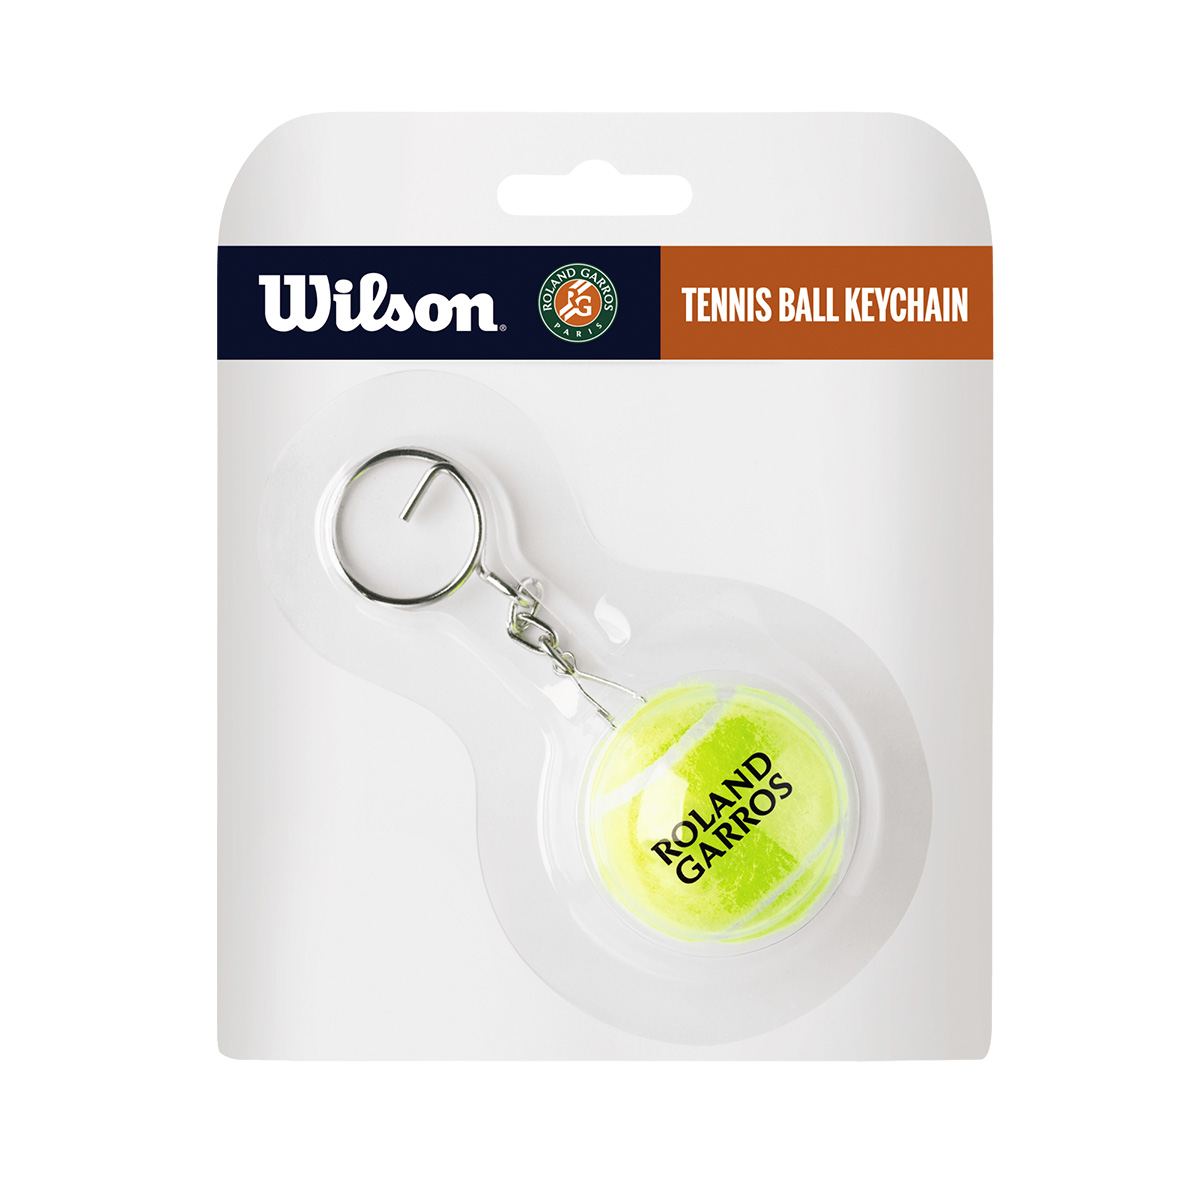 Tube 4 balles de tennis Roland Garros x Wilson toutes surfaces - jaune